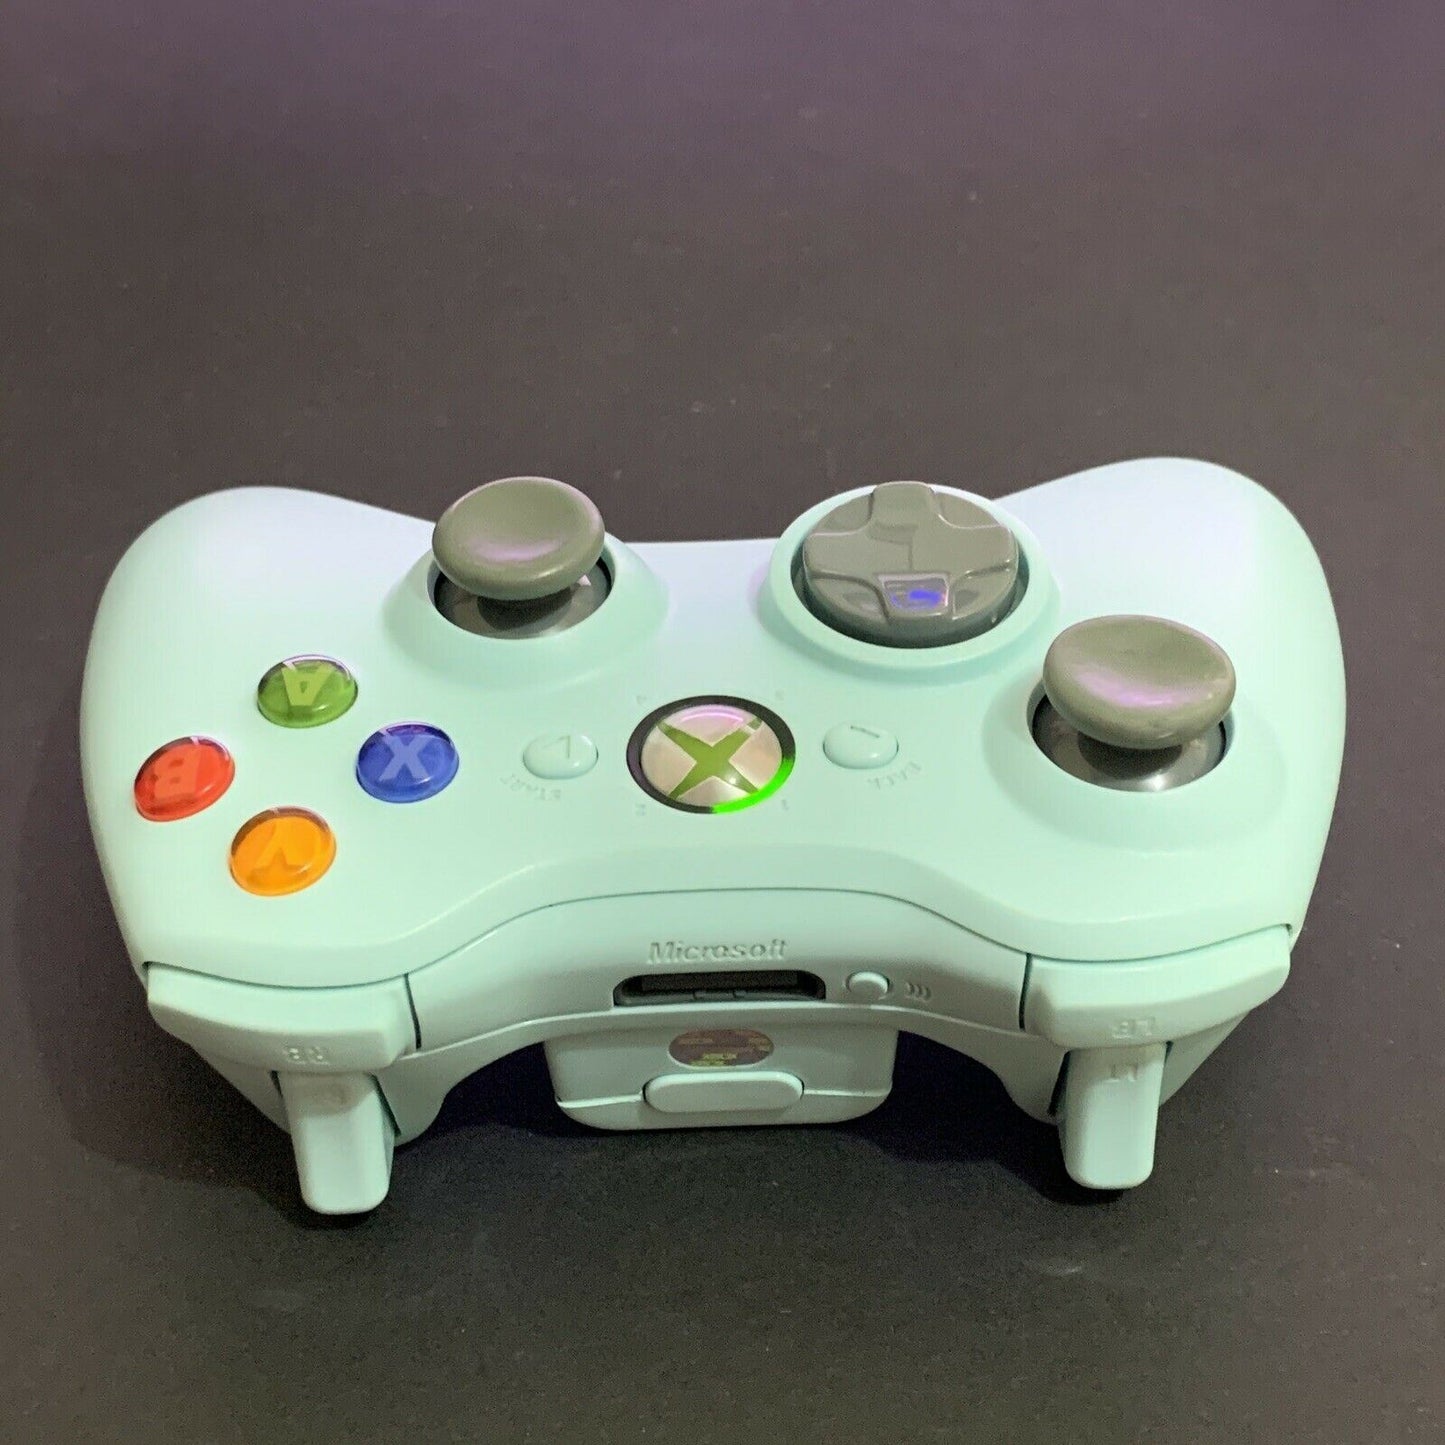 Genuine Official Microsoft Xbox 360 Wireless Controller - Light Blue. RARE!